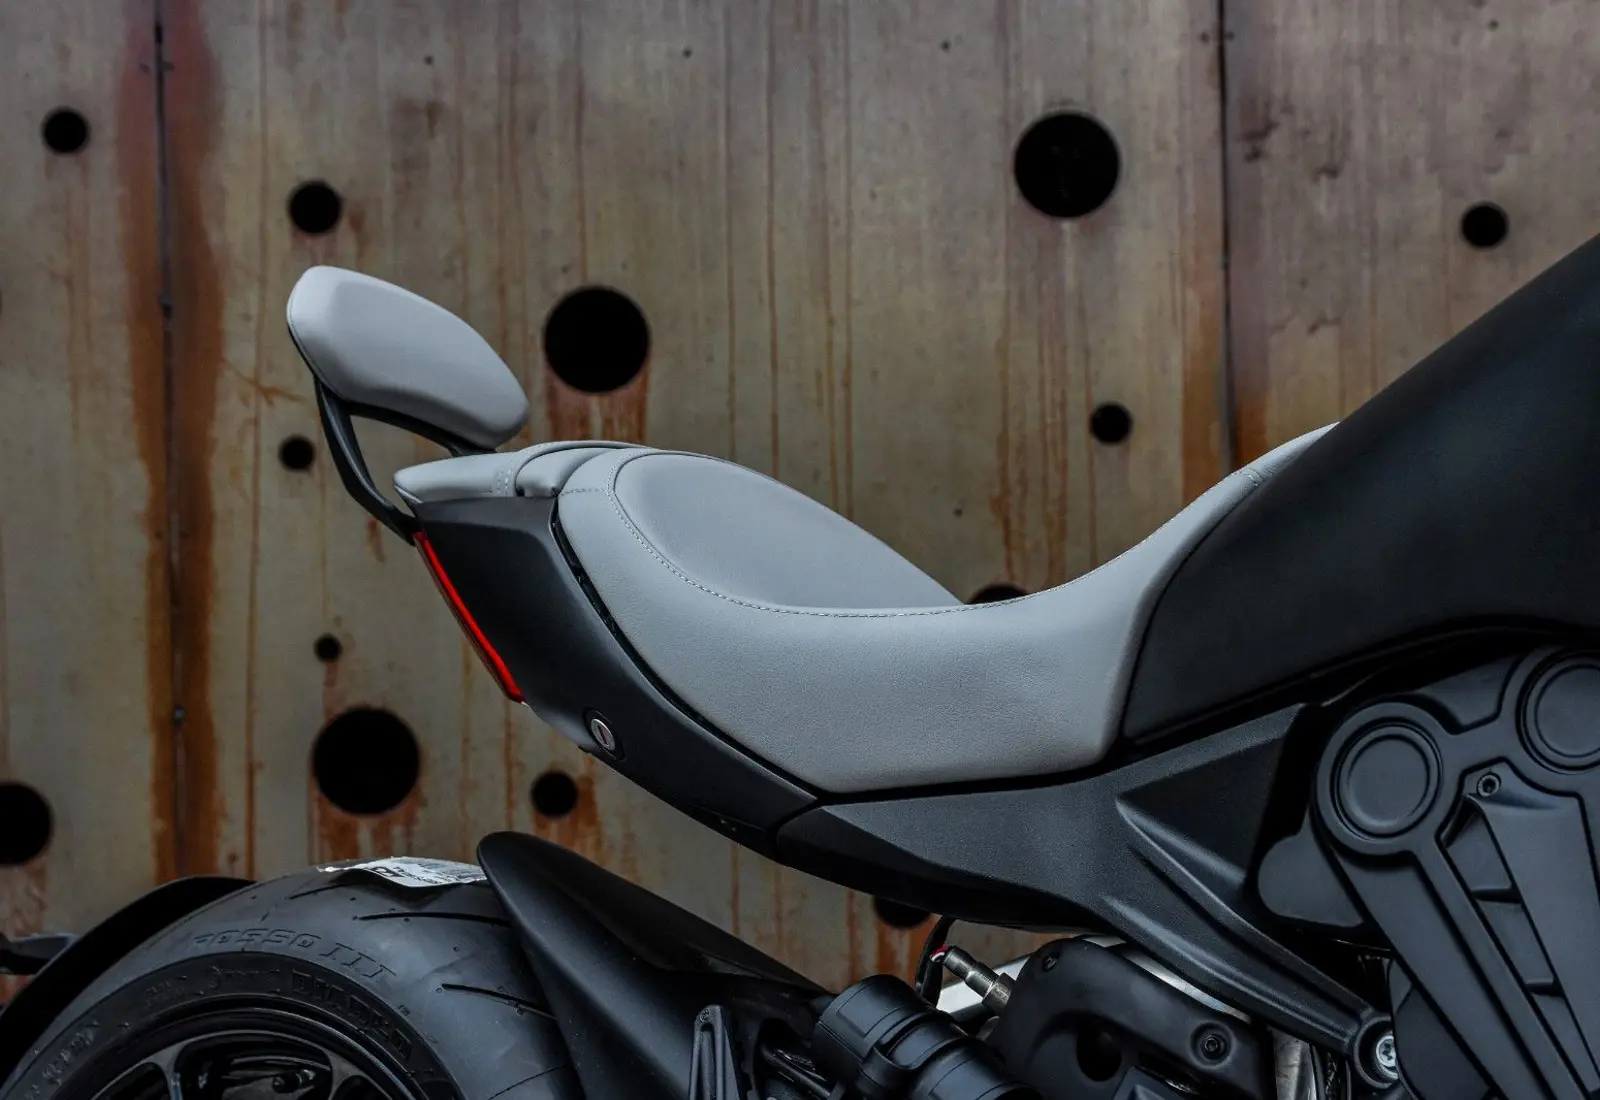 Ducati X-Diavel Nera * POLTRONA FRAU * 1 OF 500 * LIMITED ED - 41975